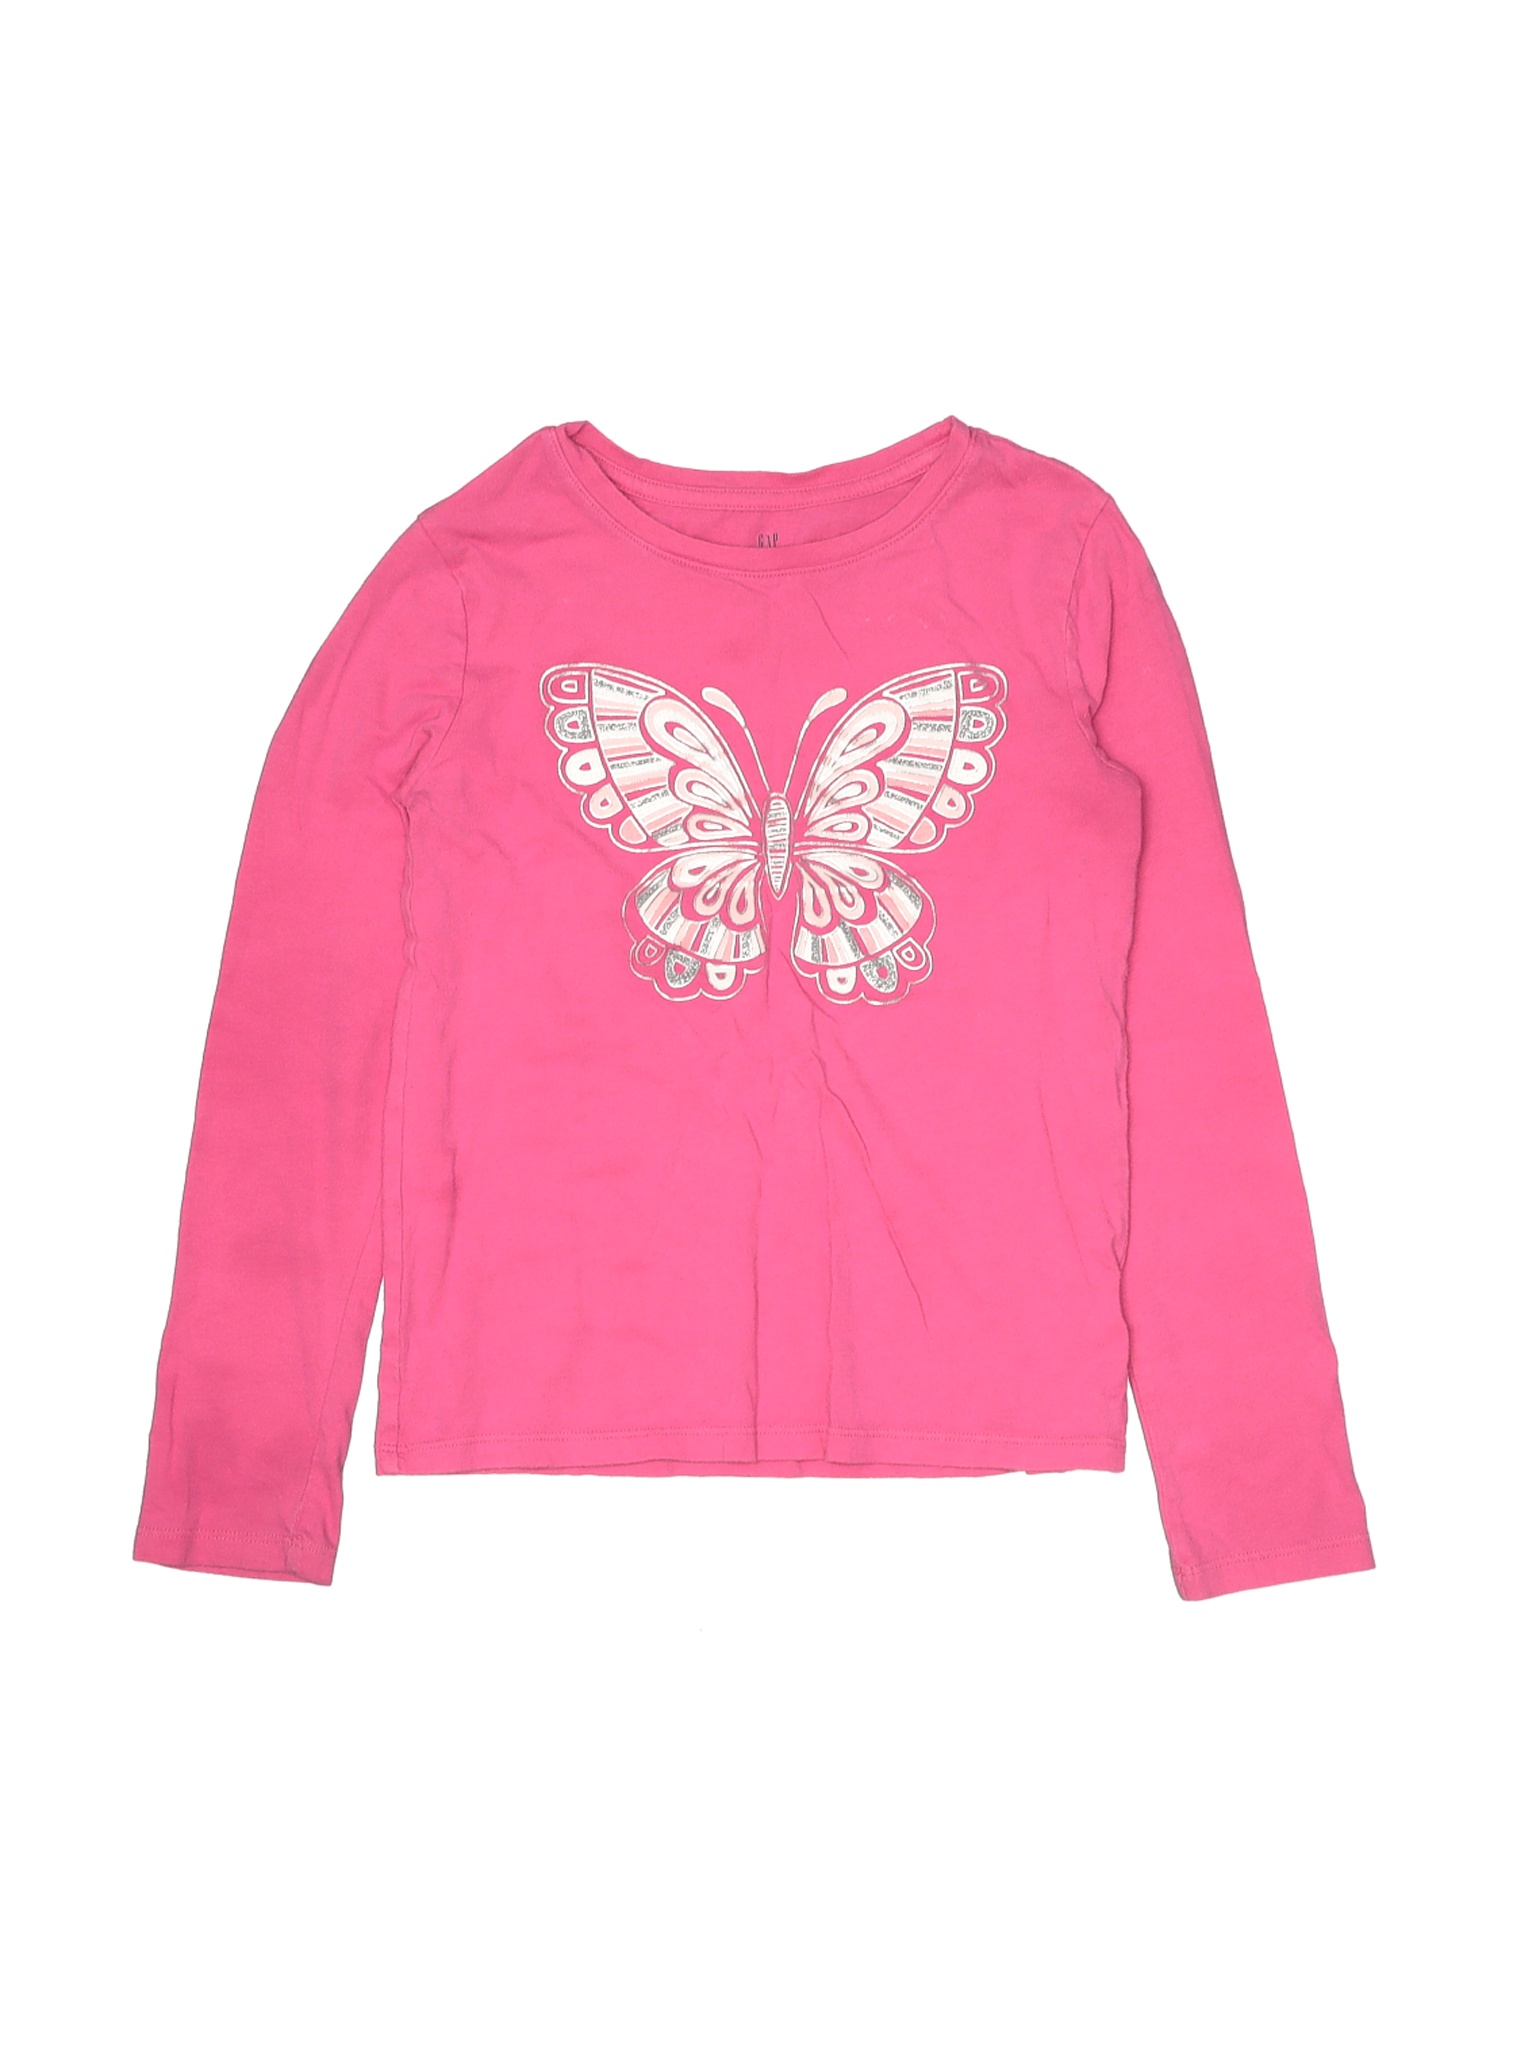 Gap Kids Girls Pink Long Sleeve T-Shirt Medium kids | eBay